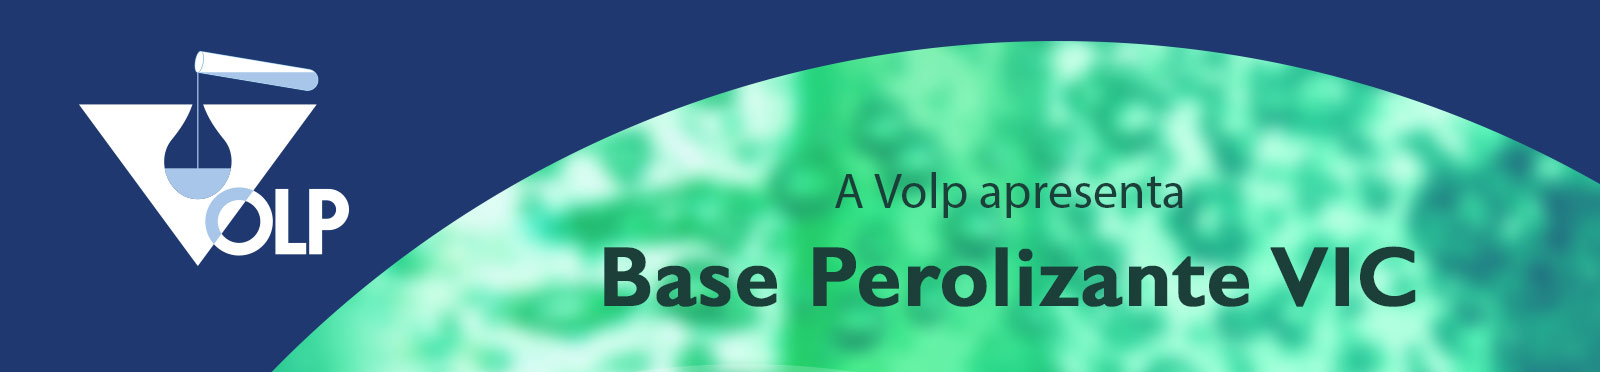 A Volp apresenta Base Perolizante VIC